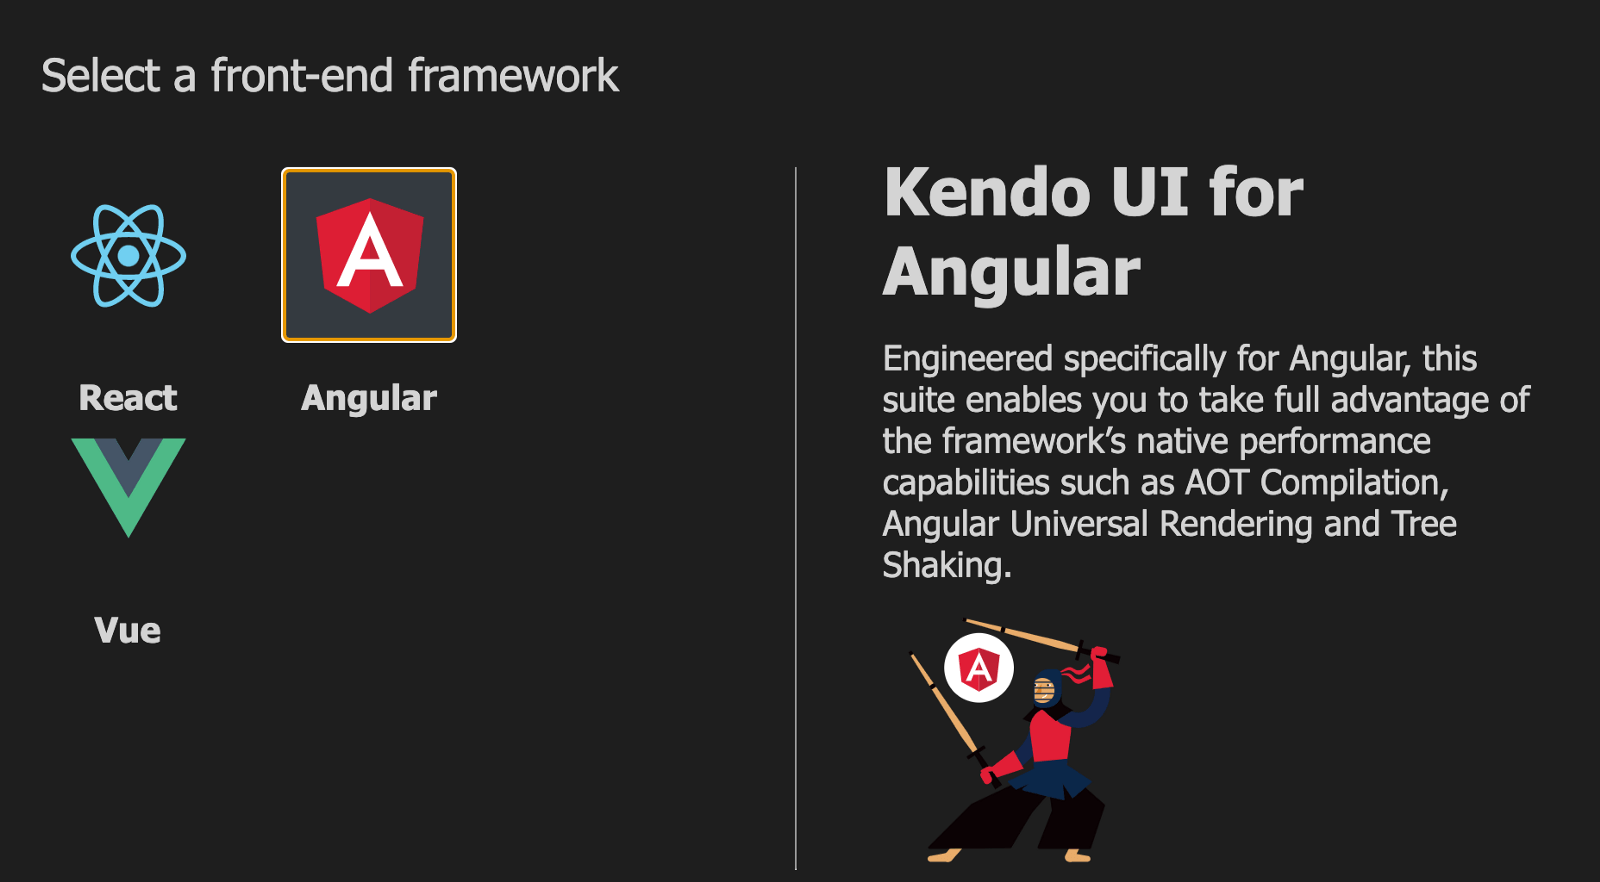 kendo-ui-wizard-framework React, Angular, Vue. We choose Angular.